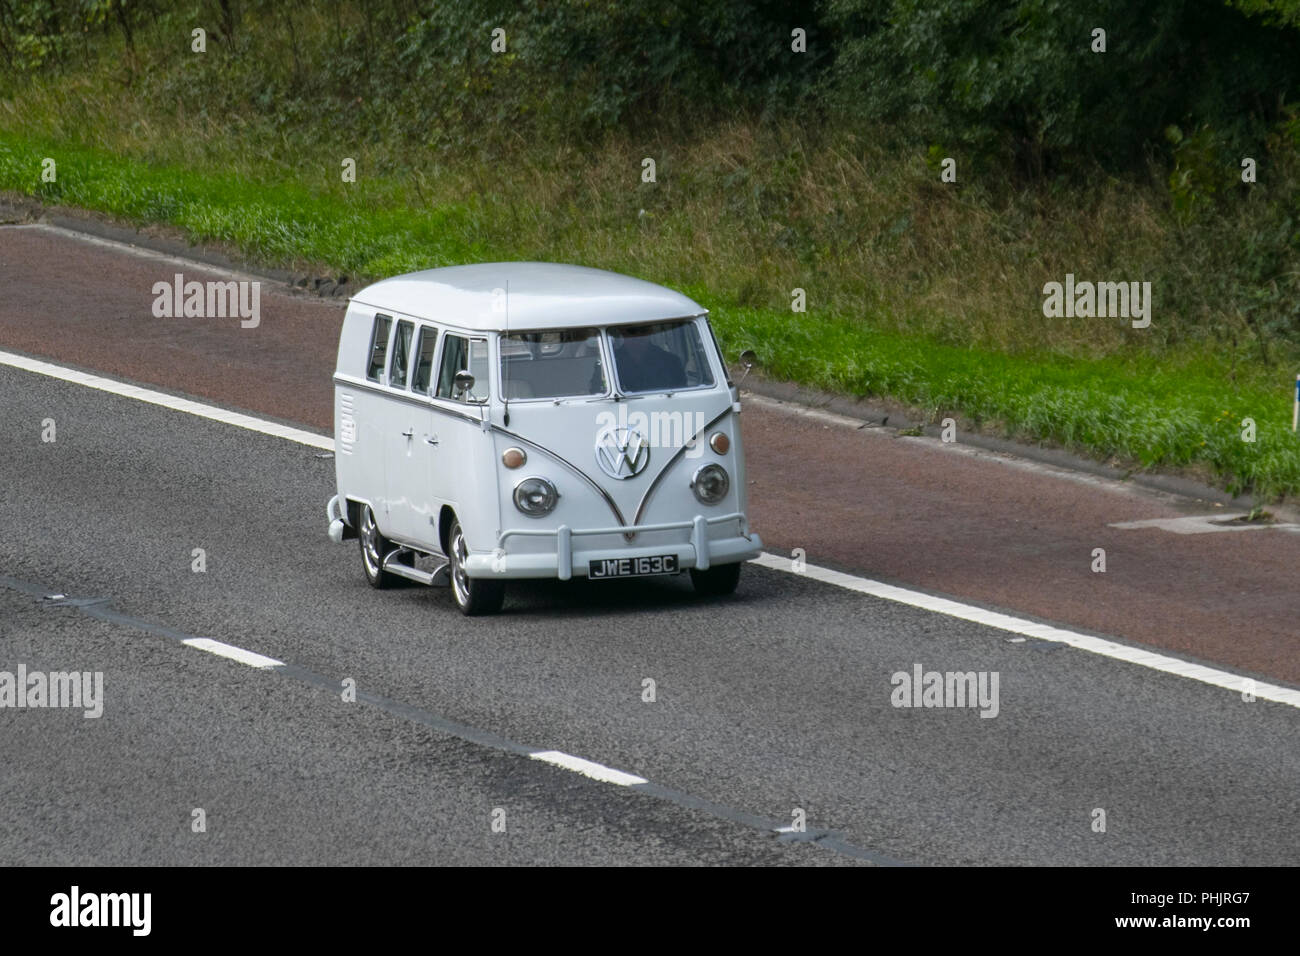 1965 60s white VW Volkswagen split-screen kombi van; Vintage VW, classic car, old retro vehicle, UK Stock Photo